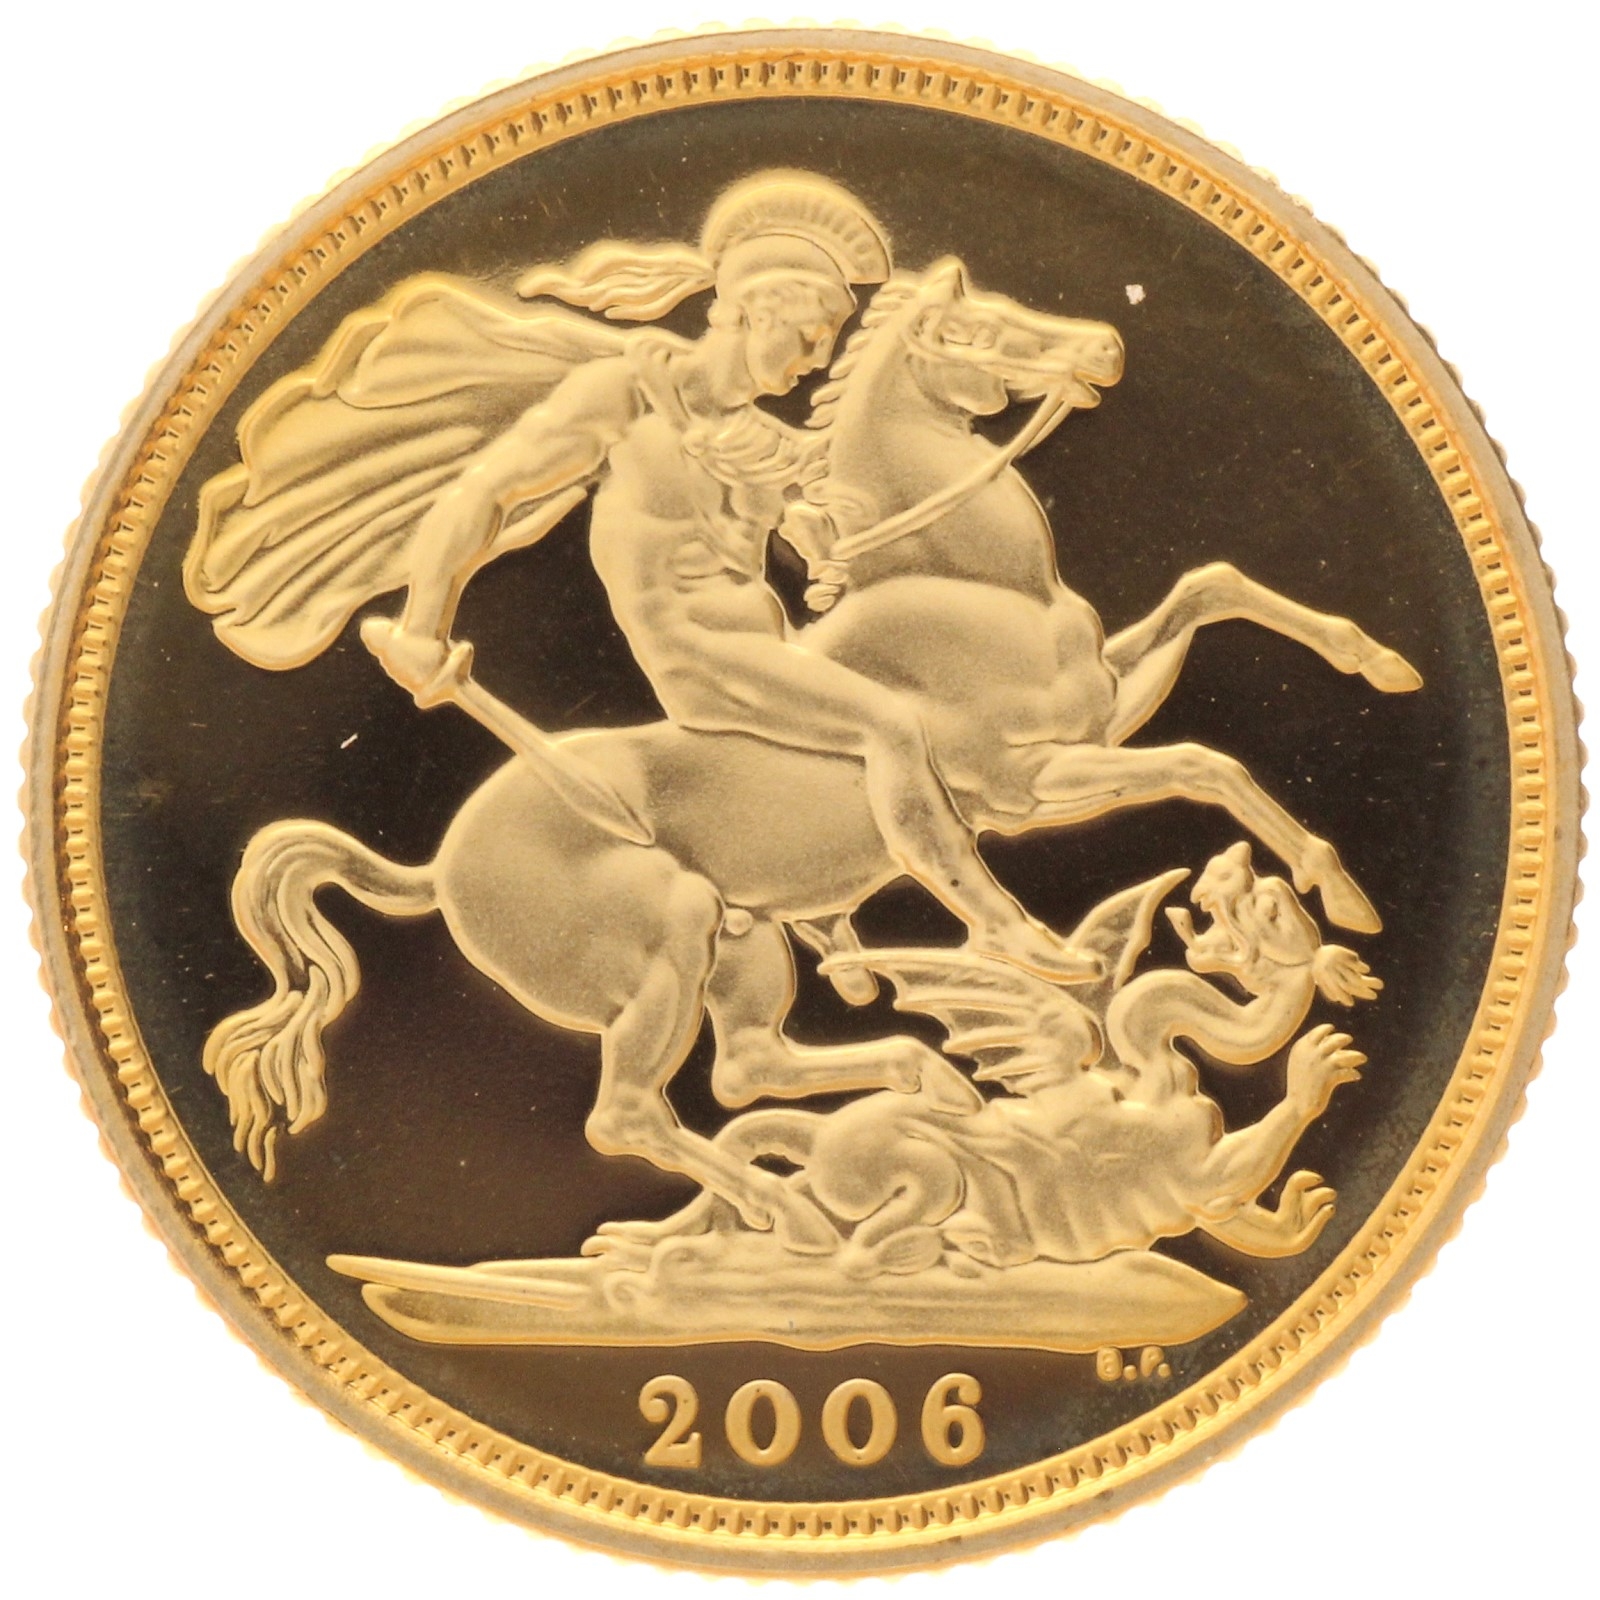 United Kingdom - 1 Sovereign - 2006 - Elizabeth II 